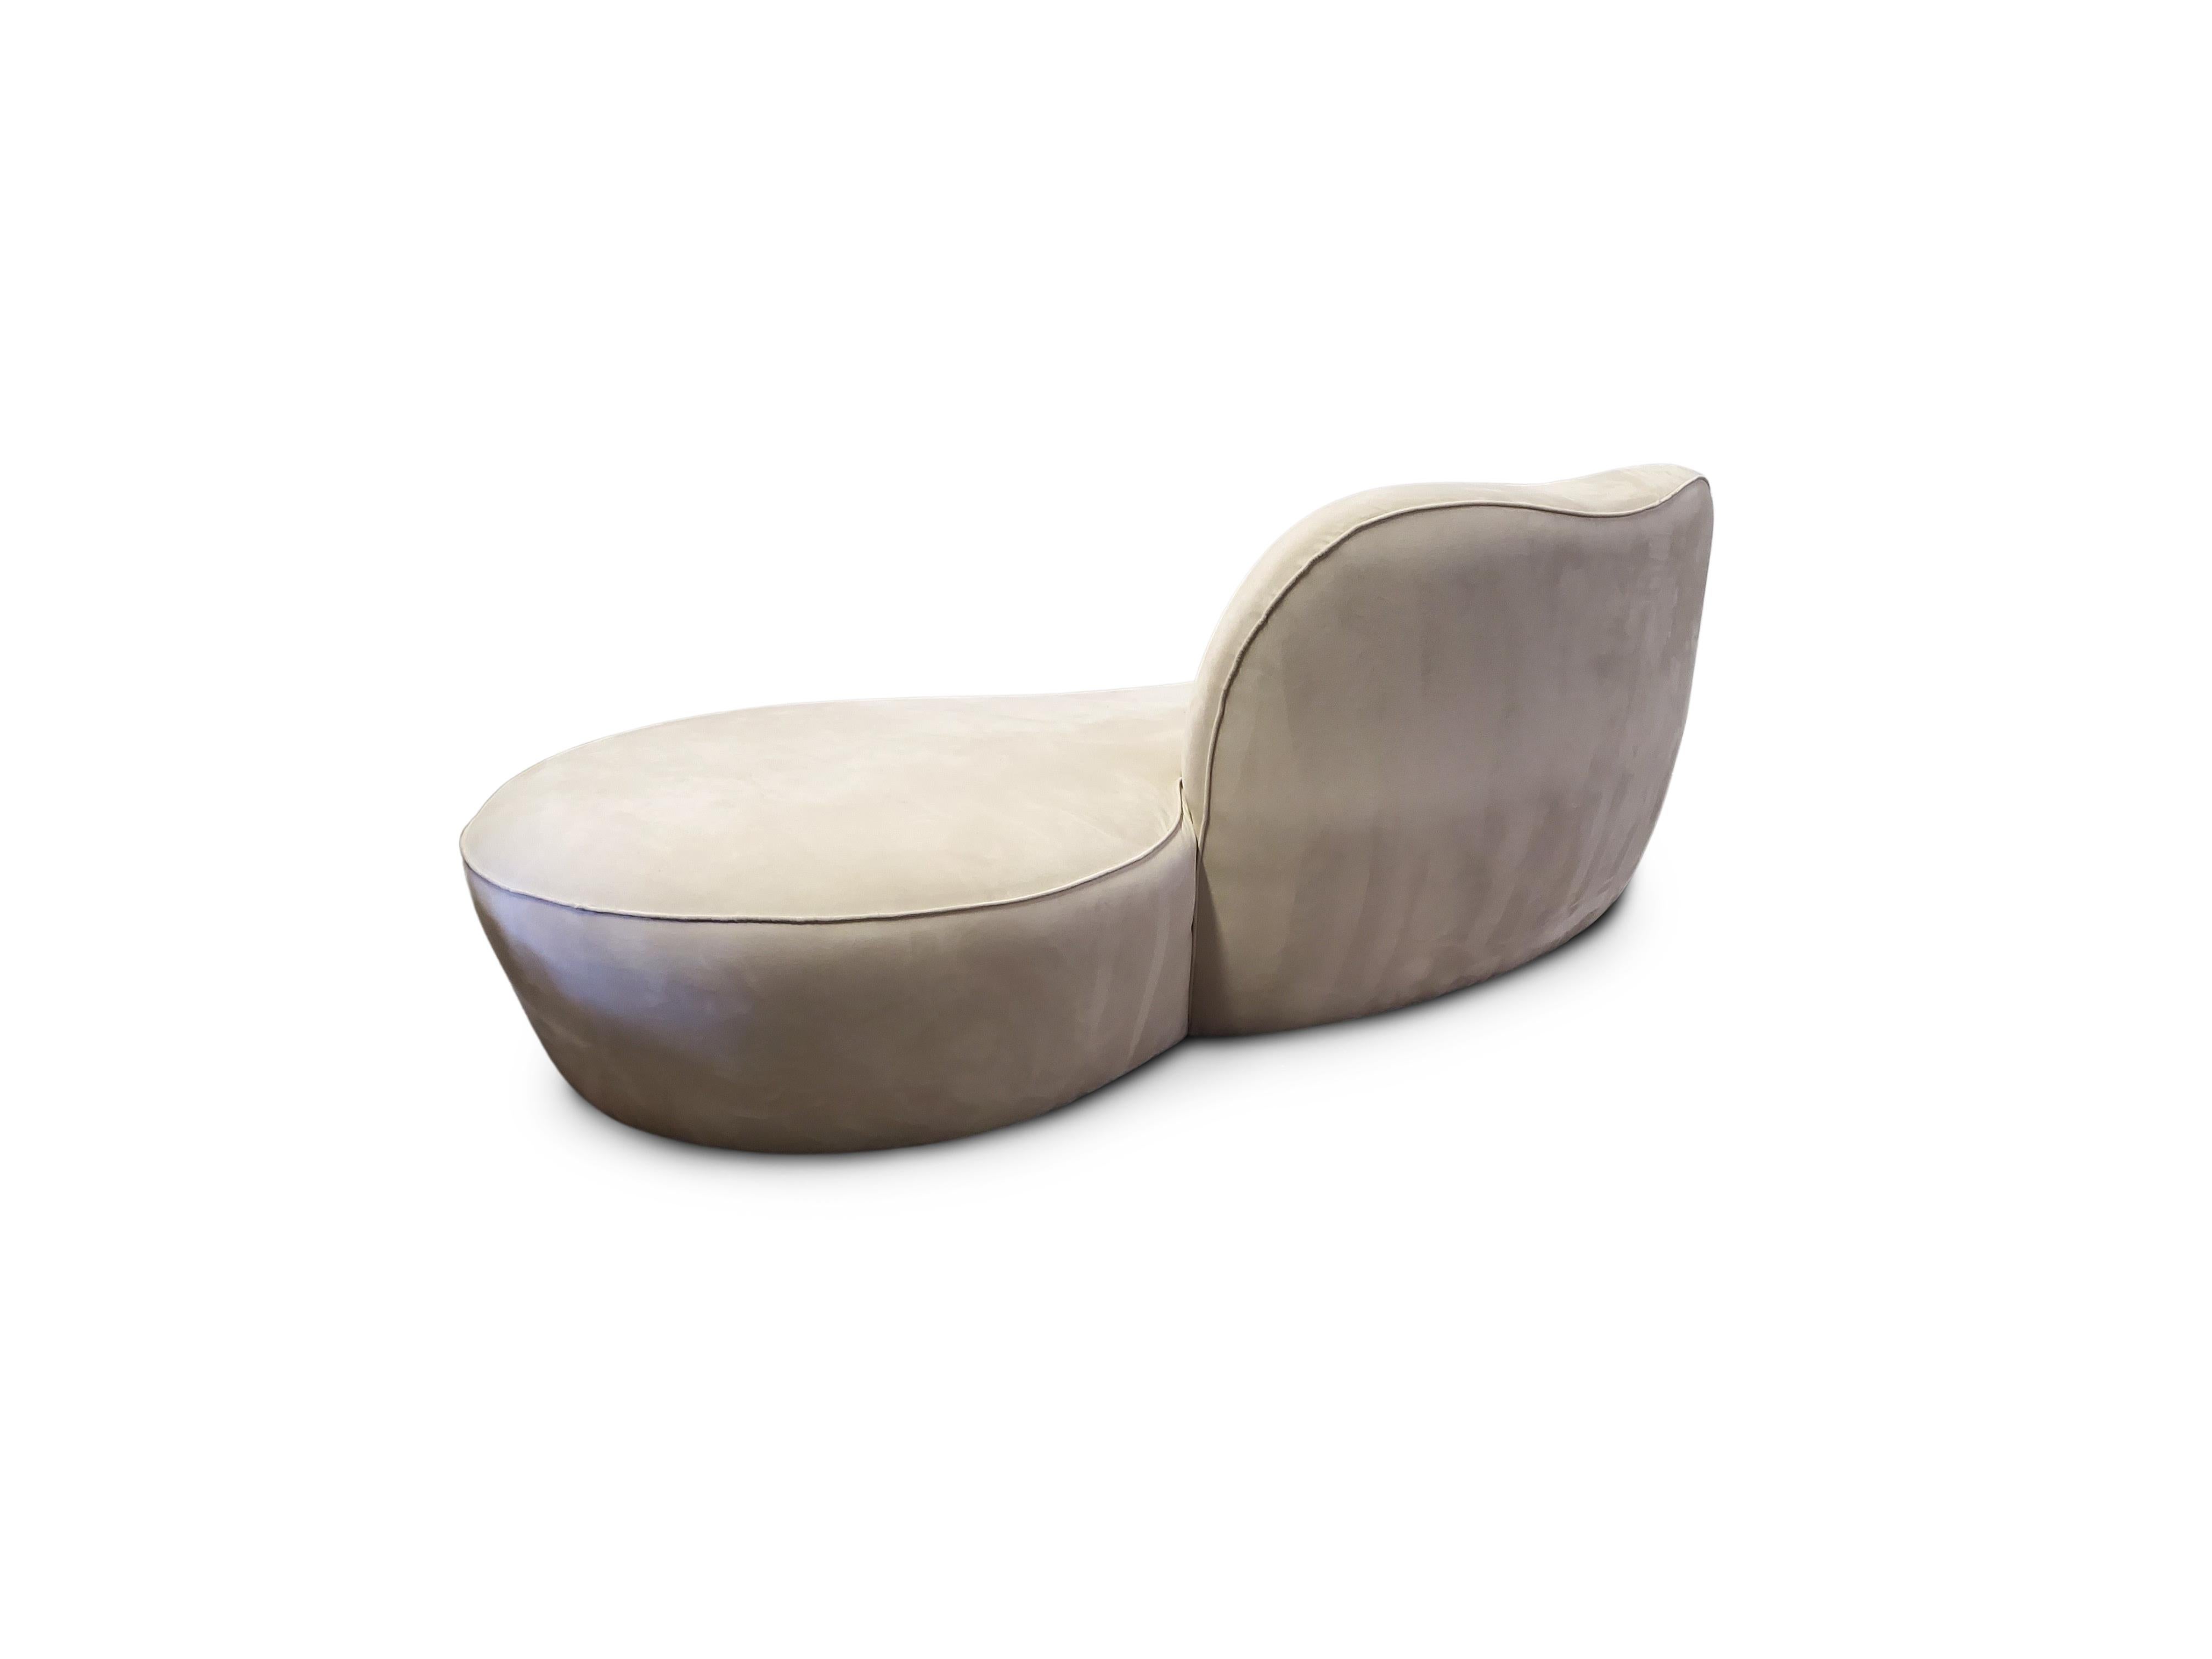 Upholstery Signed Vladimir Kagan 'Zoe' Sofa for American Leather